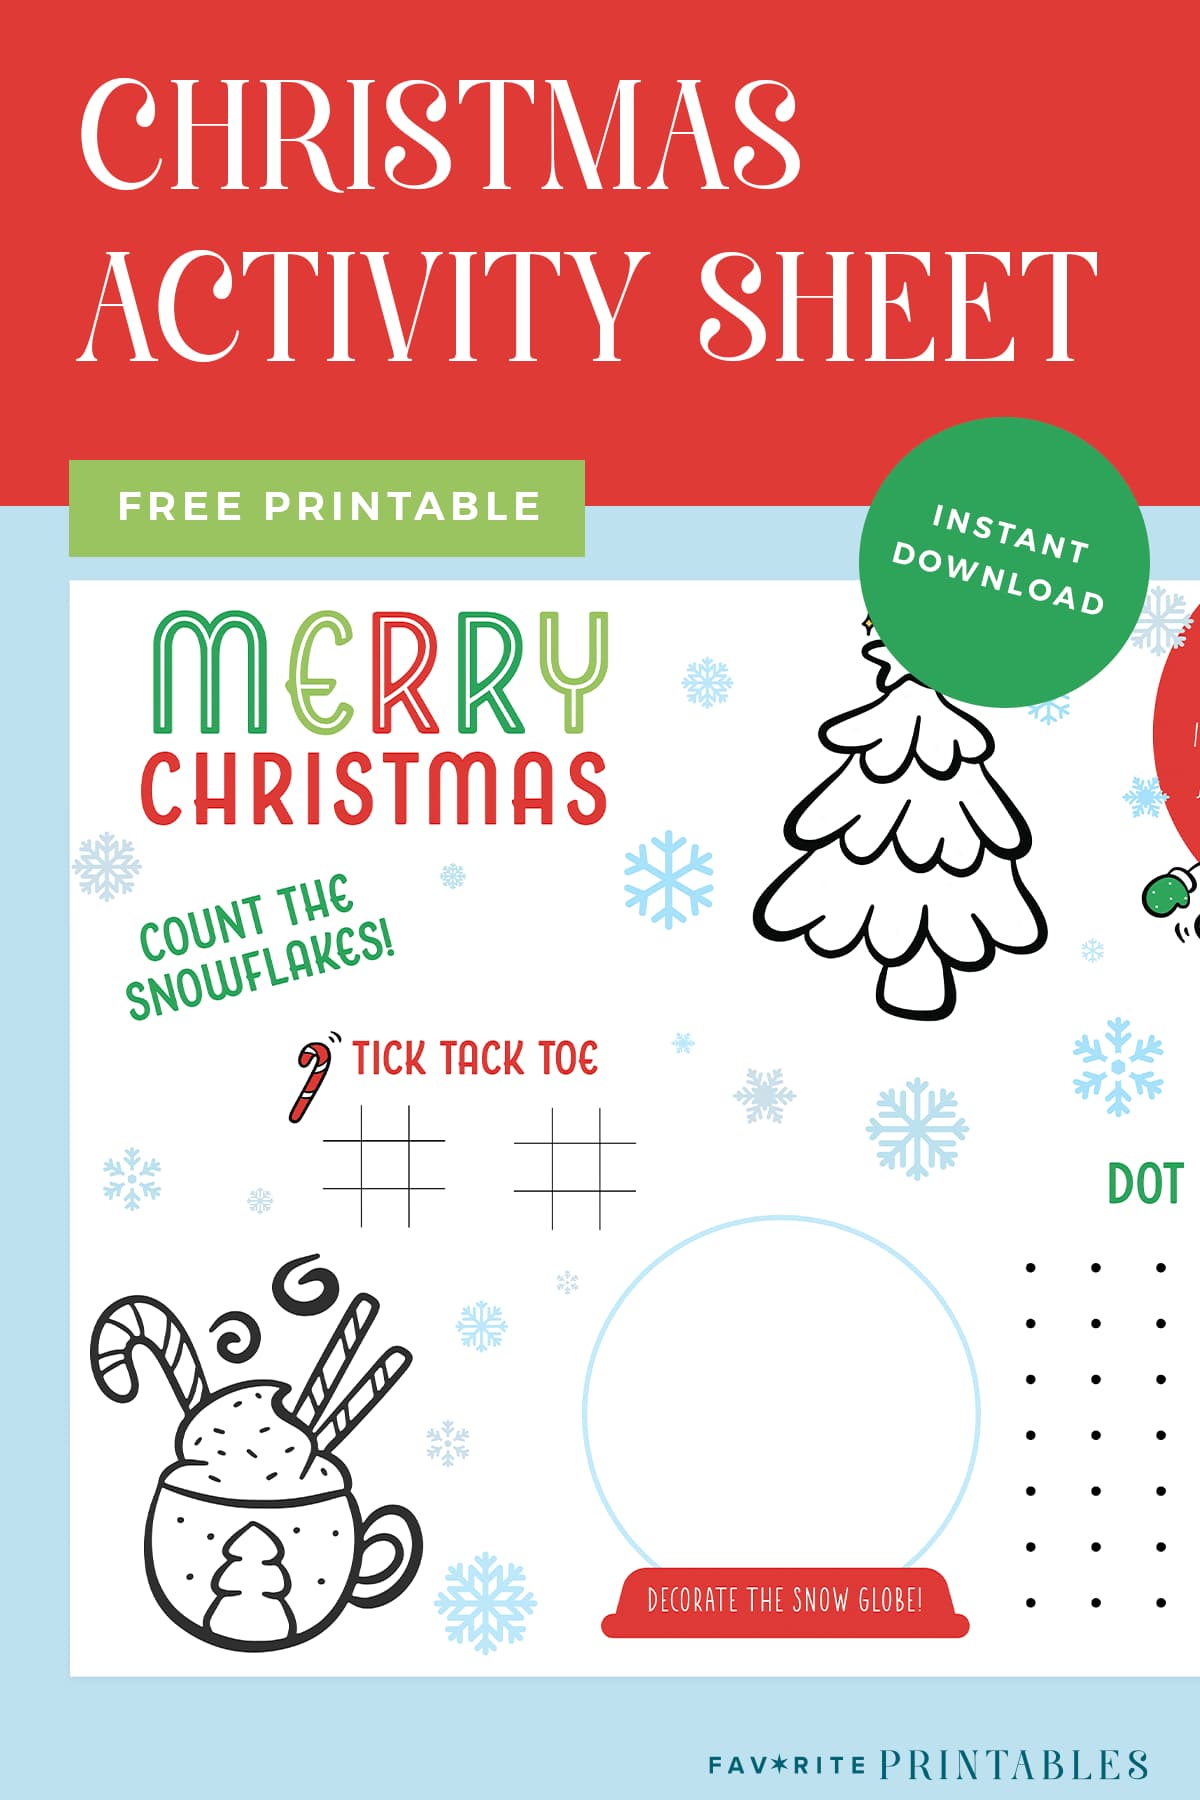 Printable Christmas activity sheet pin.